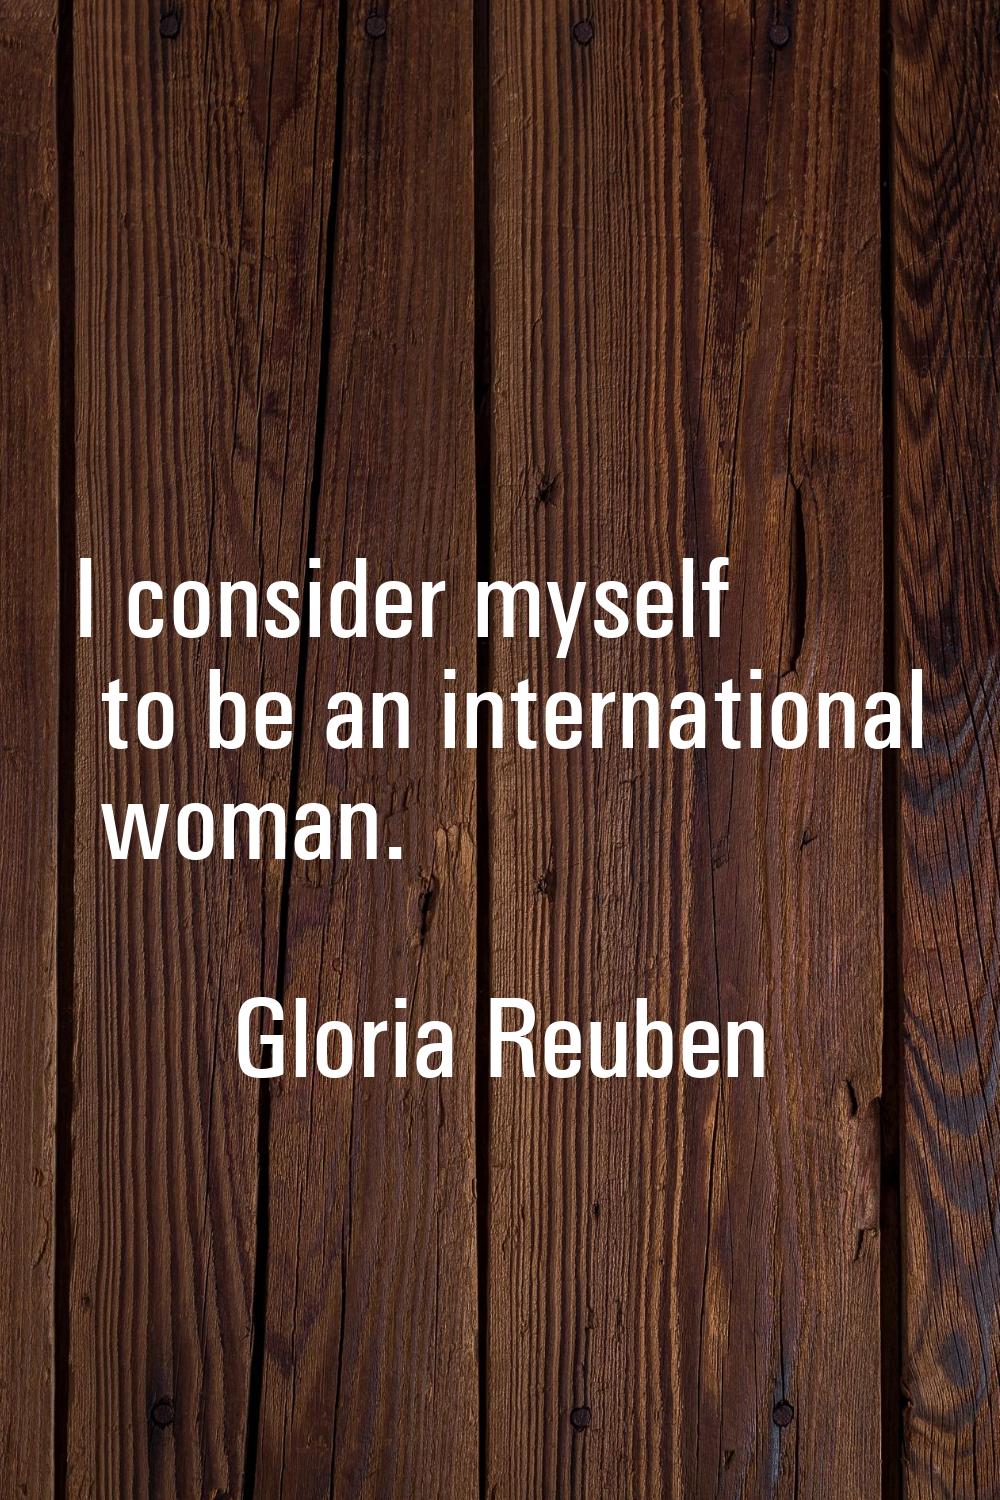 I consider myself to be an international woman.